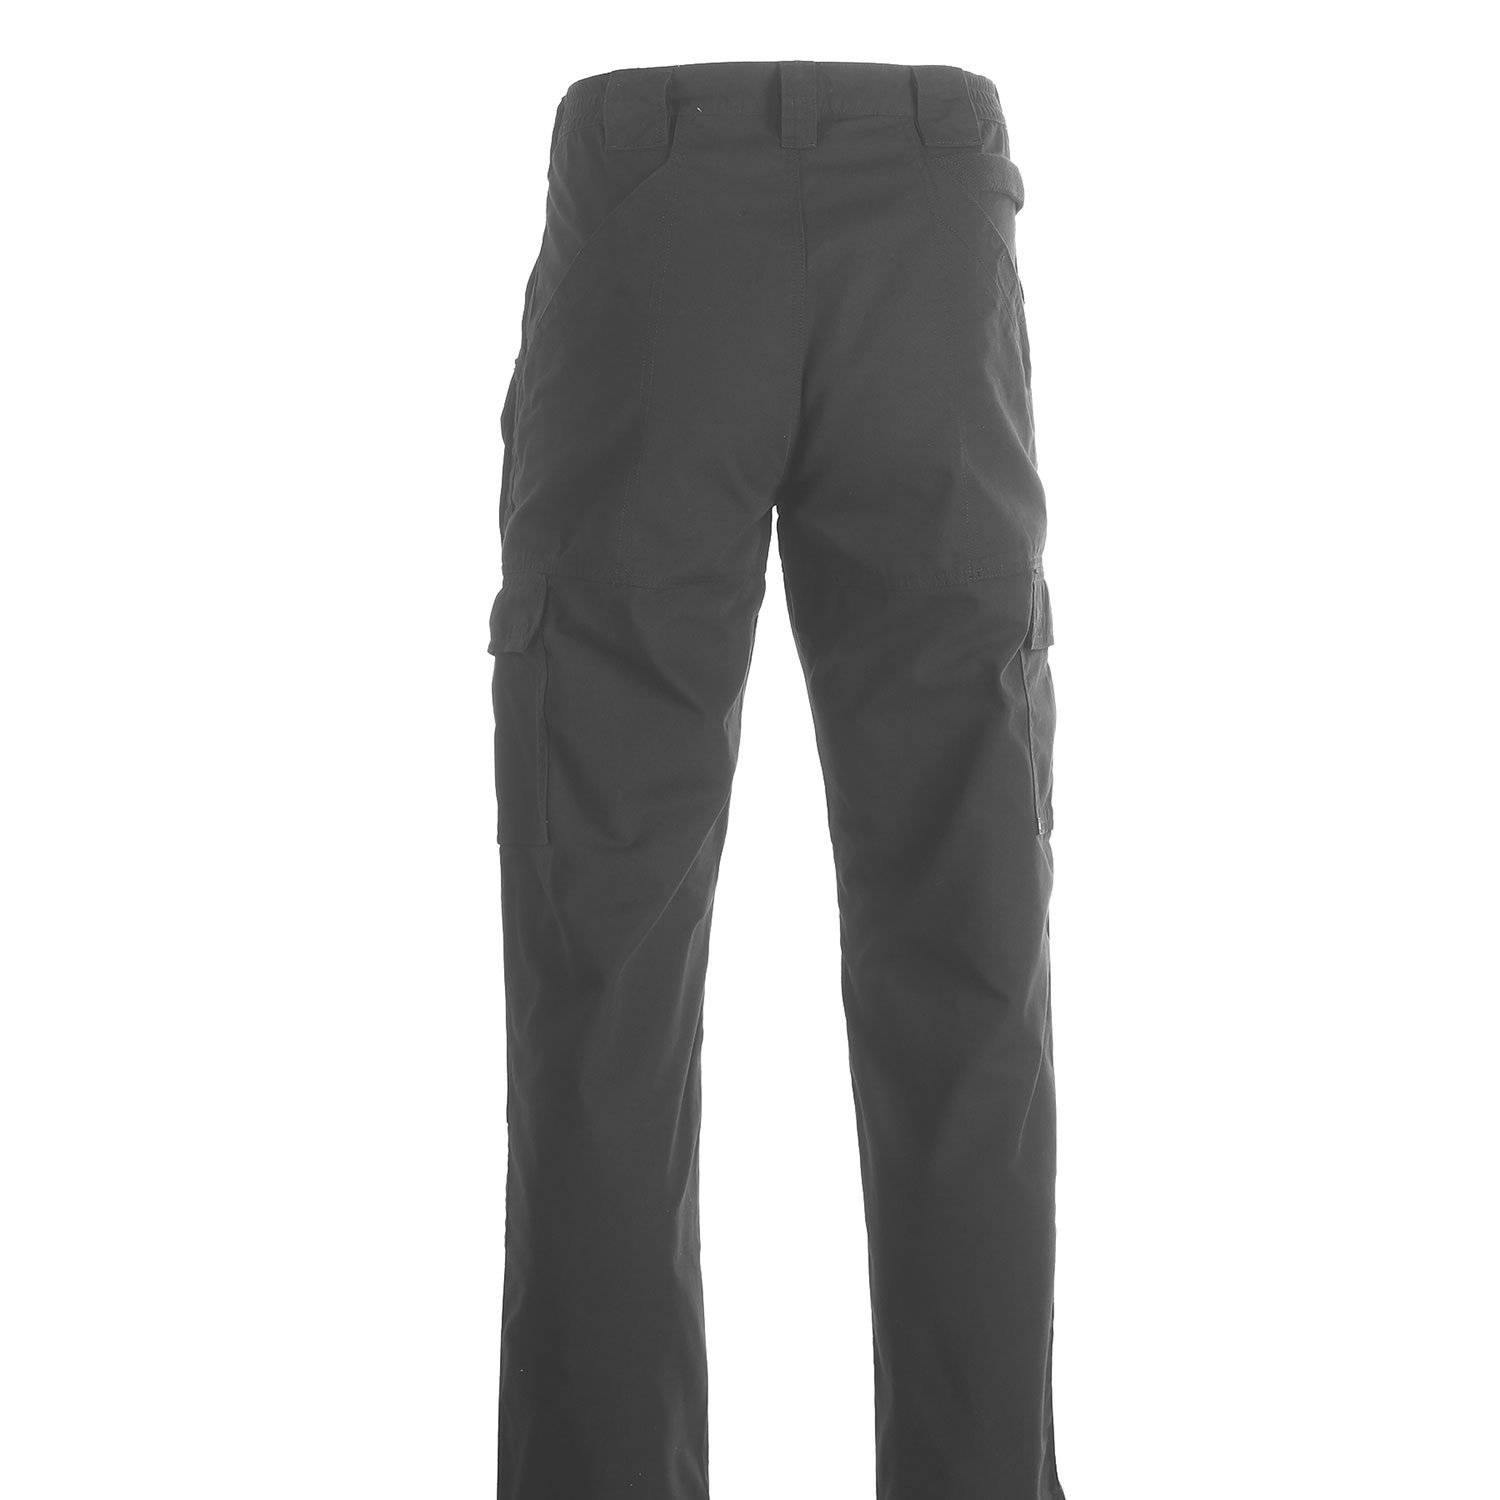 grey 511 tactical pants